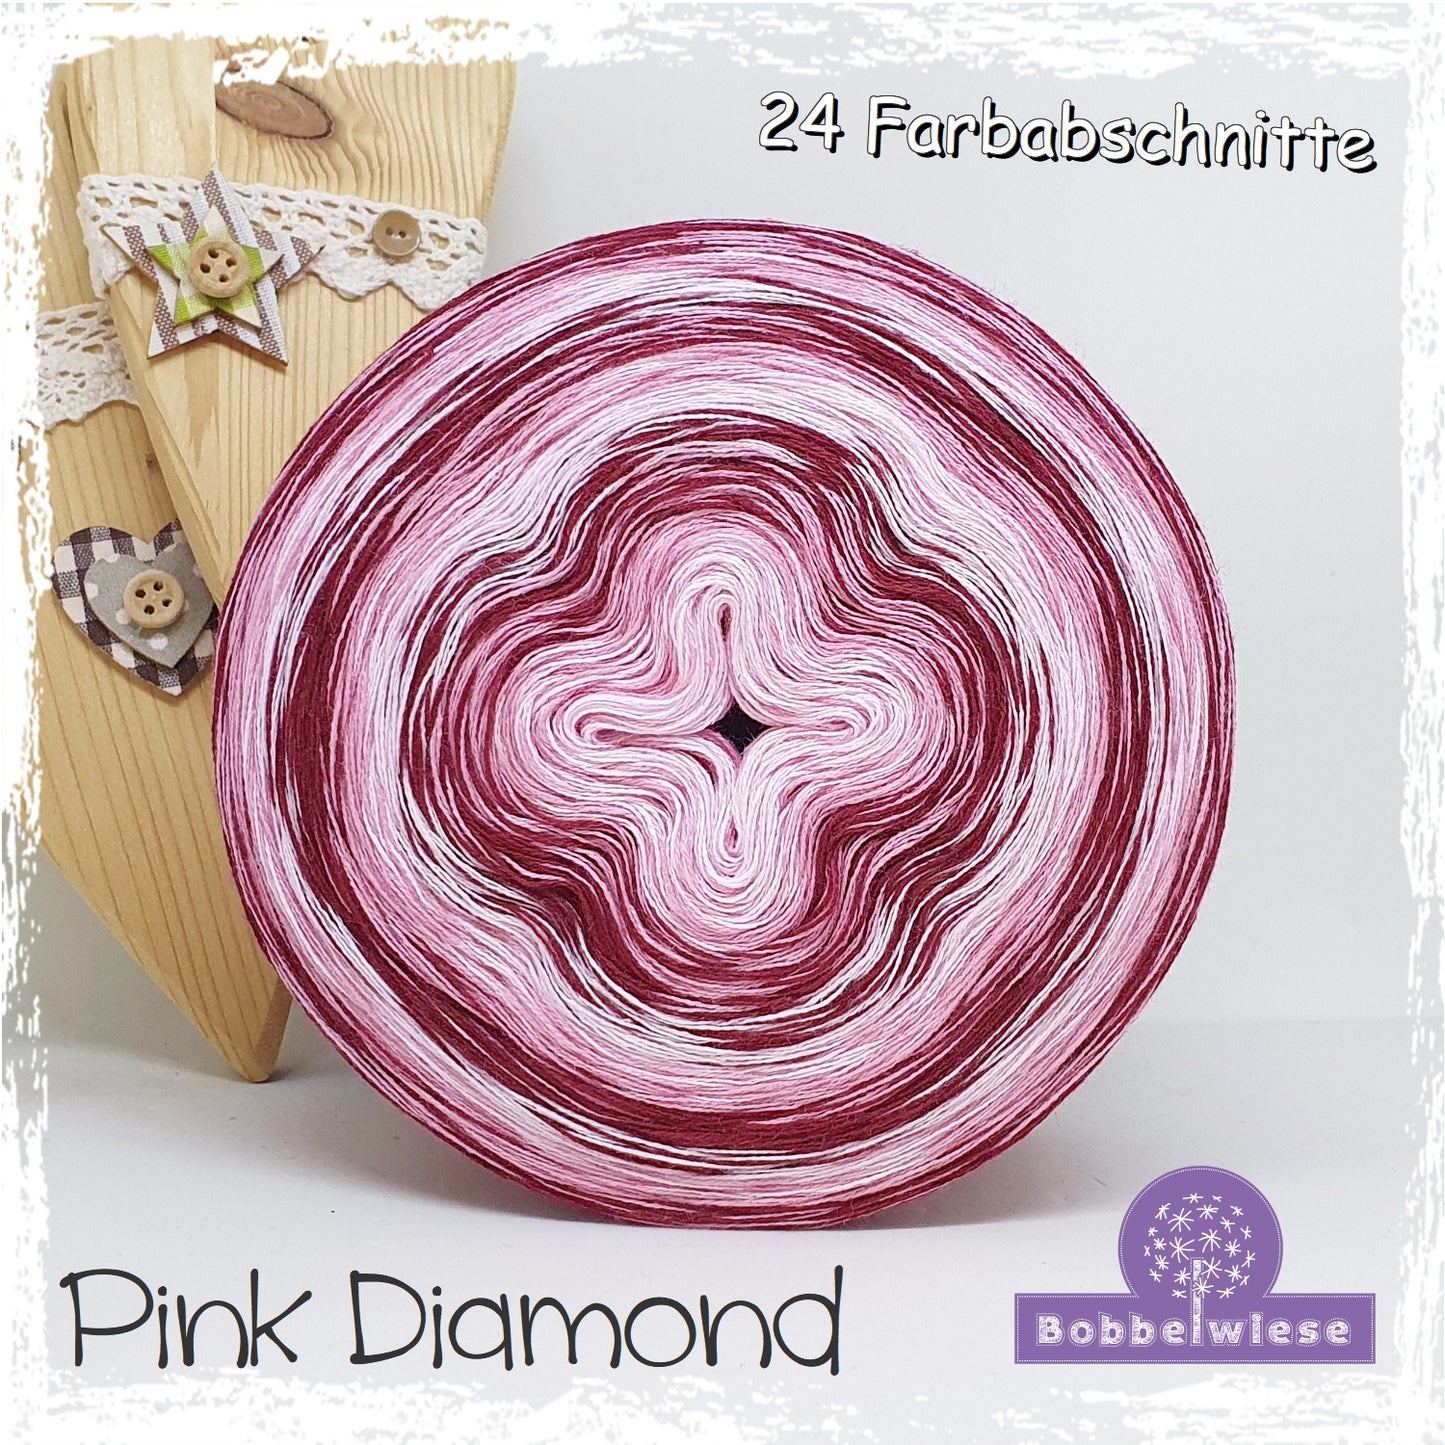 Bobbel "Pink Diamond", 24 Farbabschnitte, 4fädig